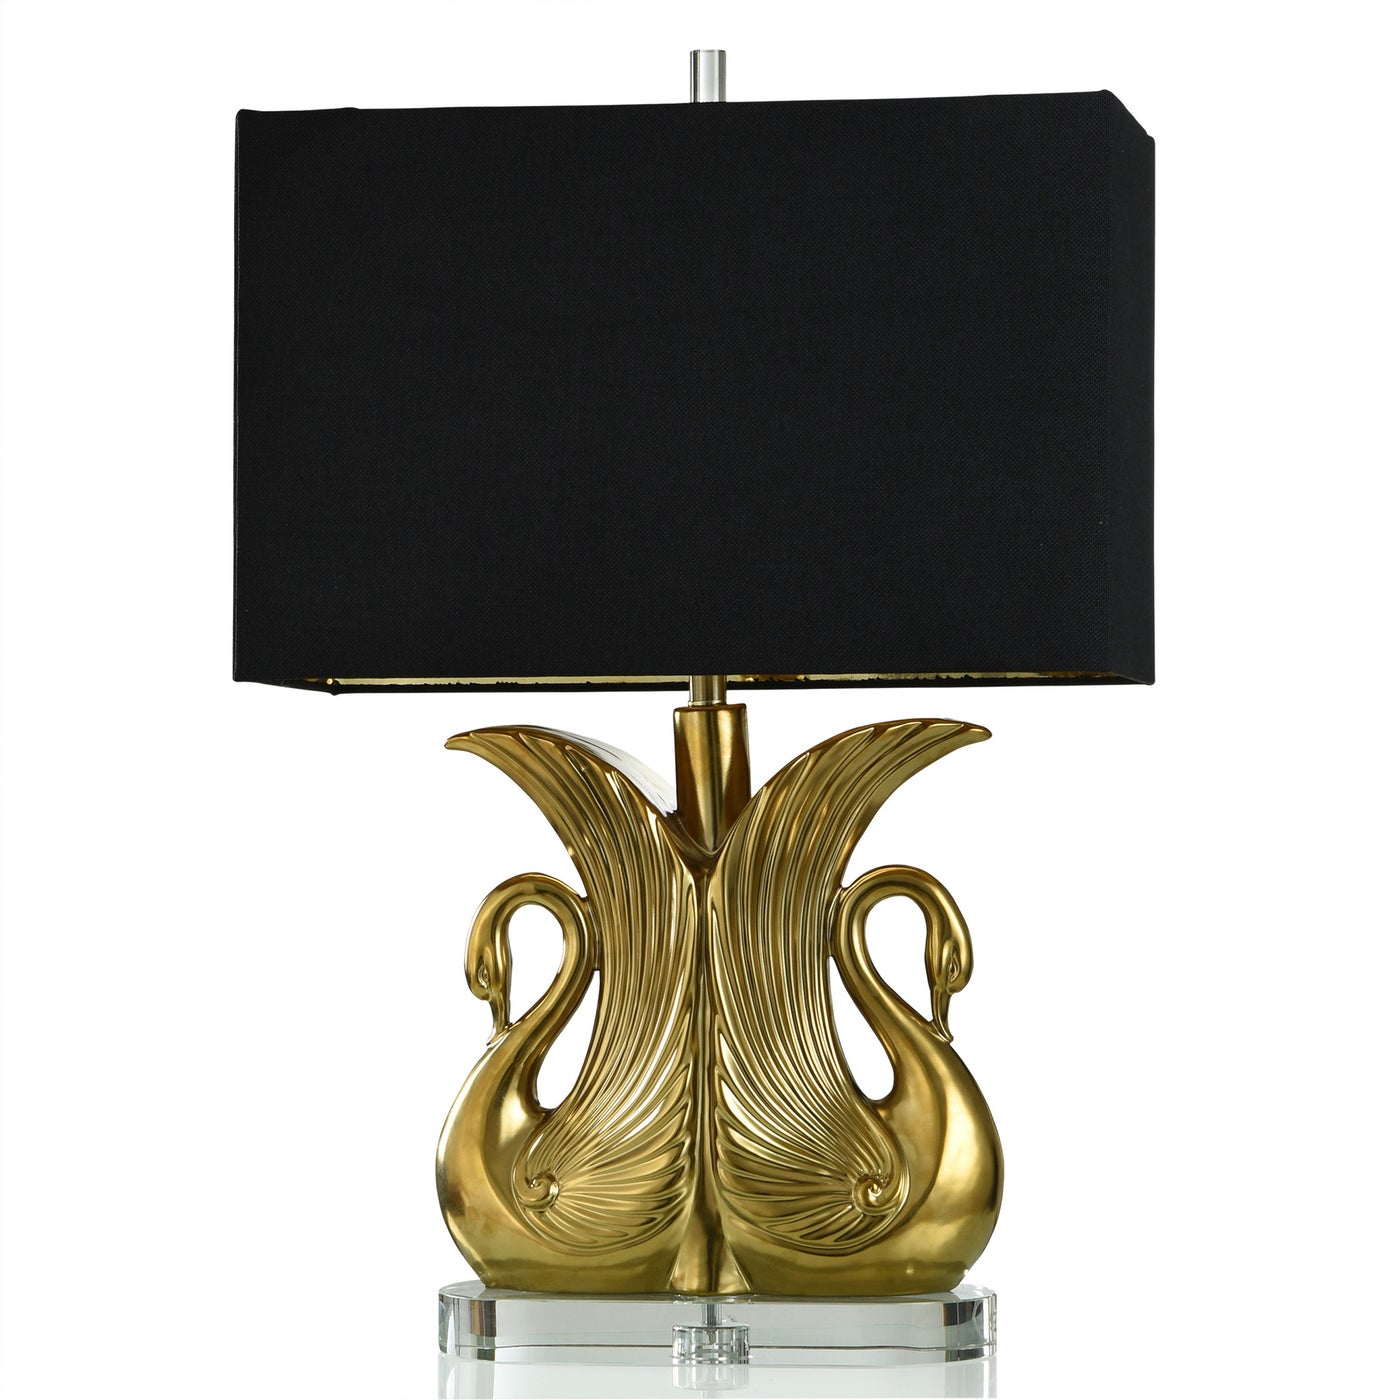 VOGEL TABLE LAMP | Antique Gold on Ceramic Body with Crystal Base | Hardback Shade